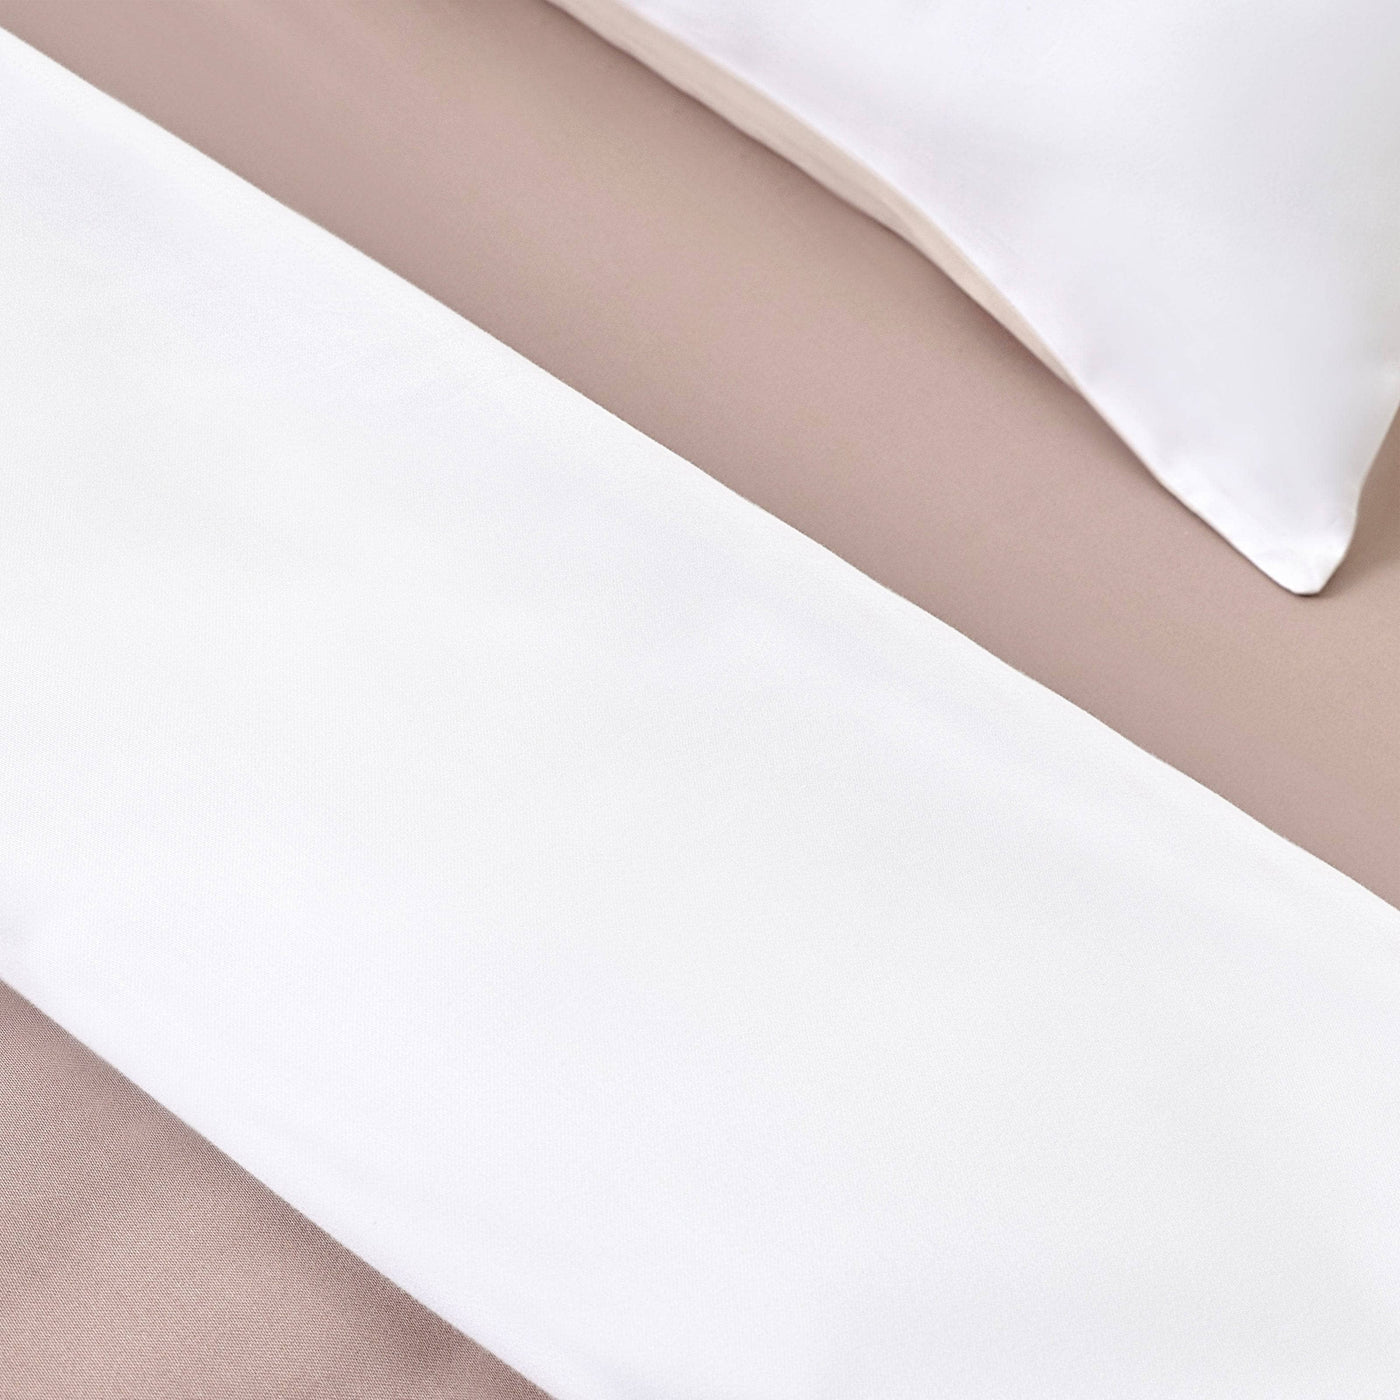 Charles 100% Turkish Cotton Sateen 210 TC Duvet Cover Set + Fitted Sheet, Brown - Beige, King Size Bedding Sets sazy.com